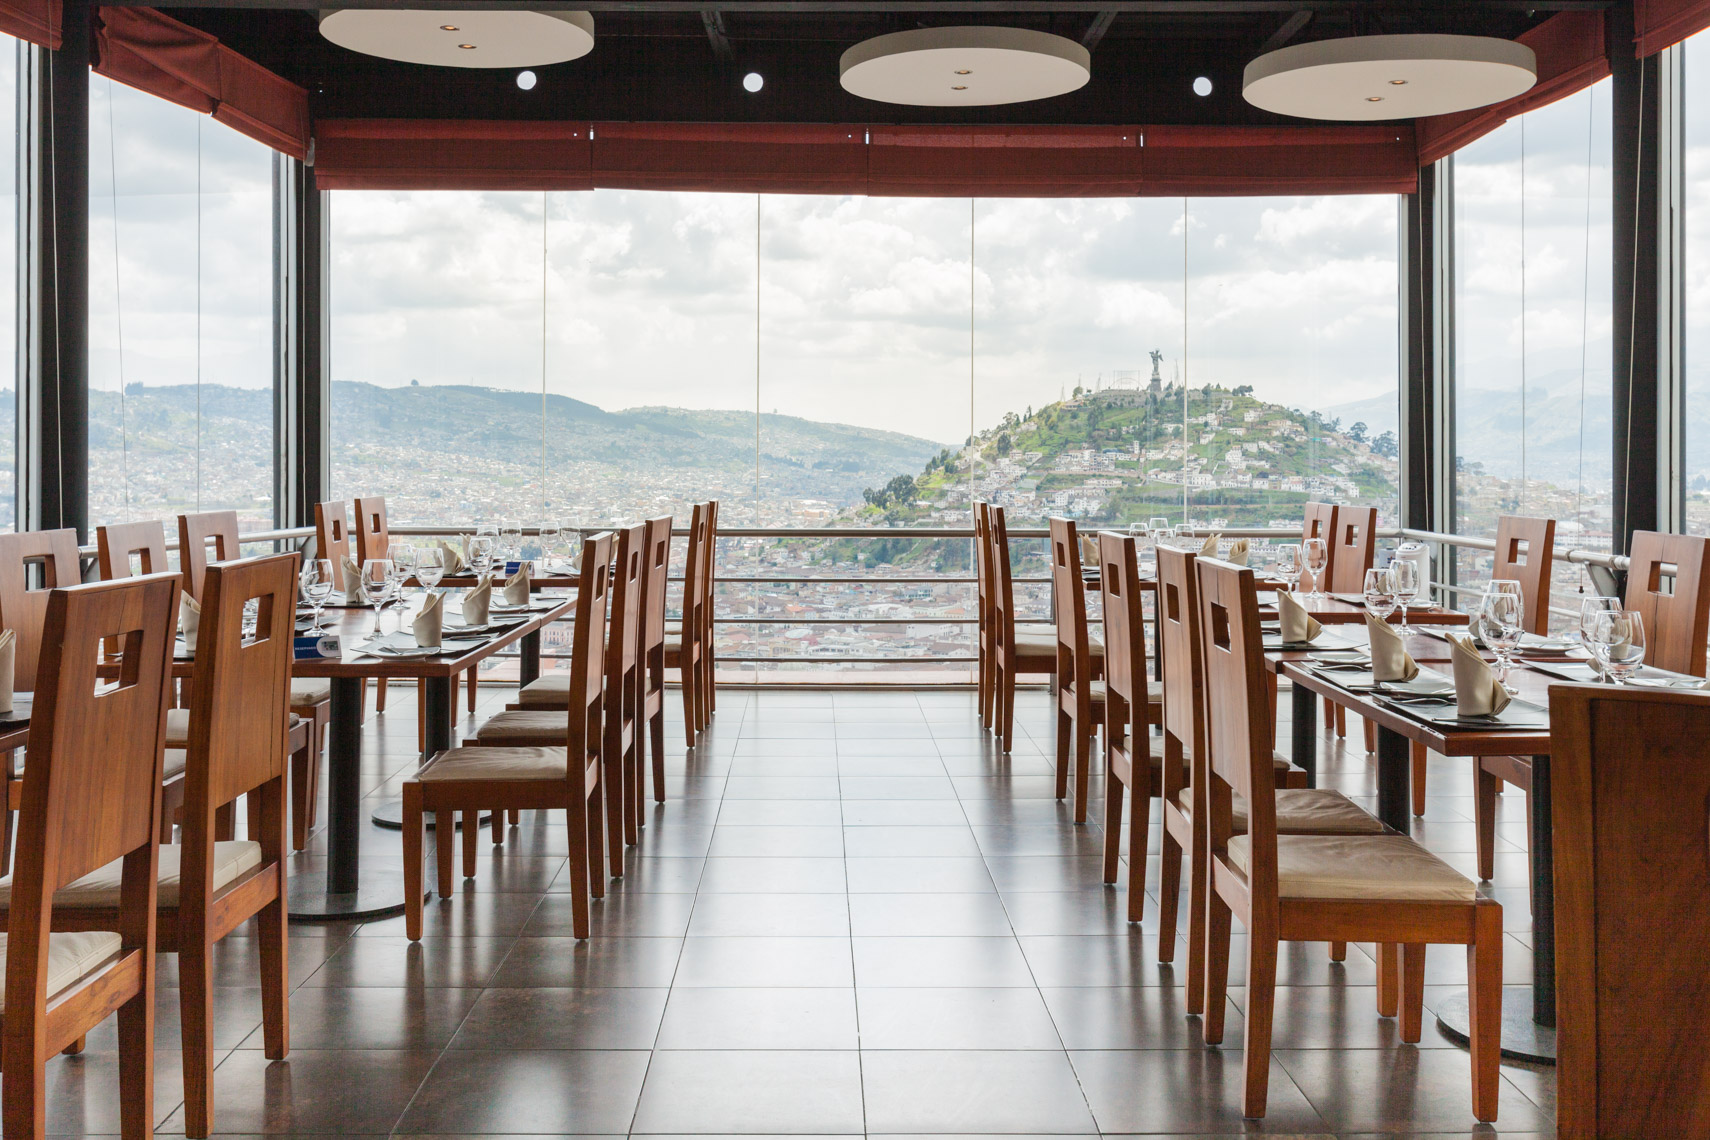 Interiors of glass walled restaurant overlooking mountain vista